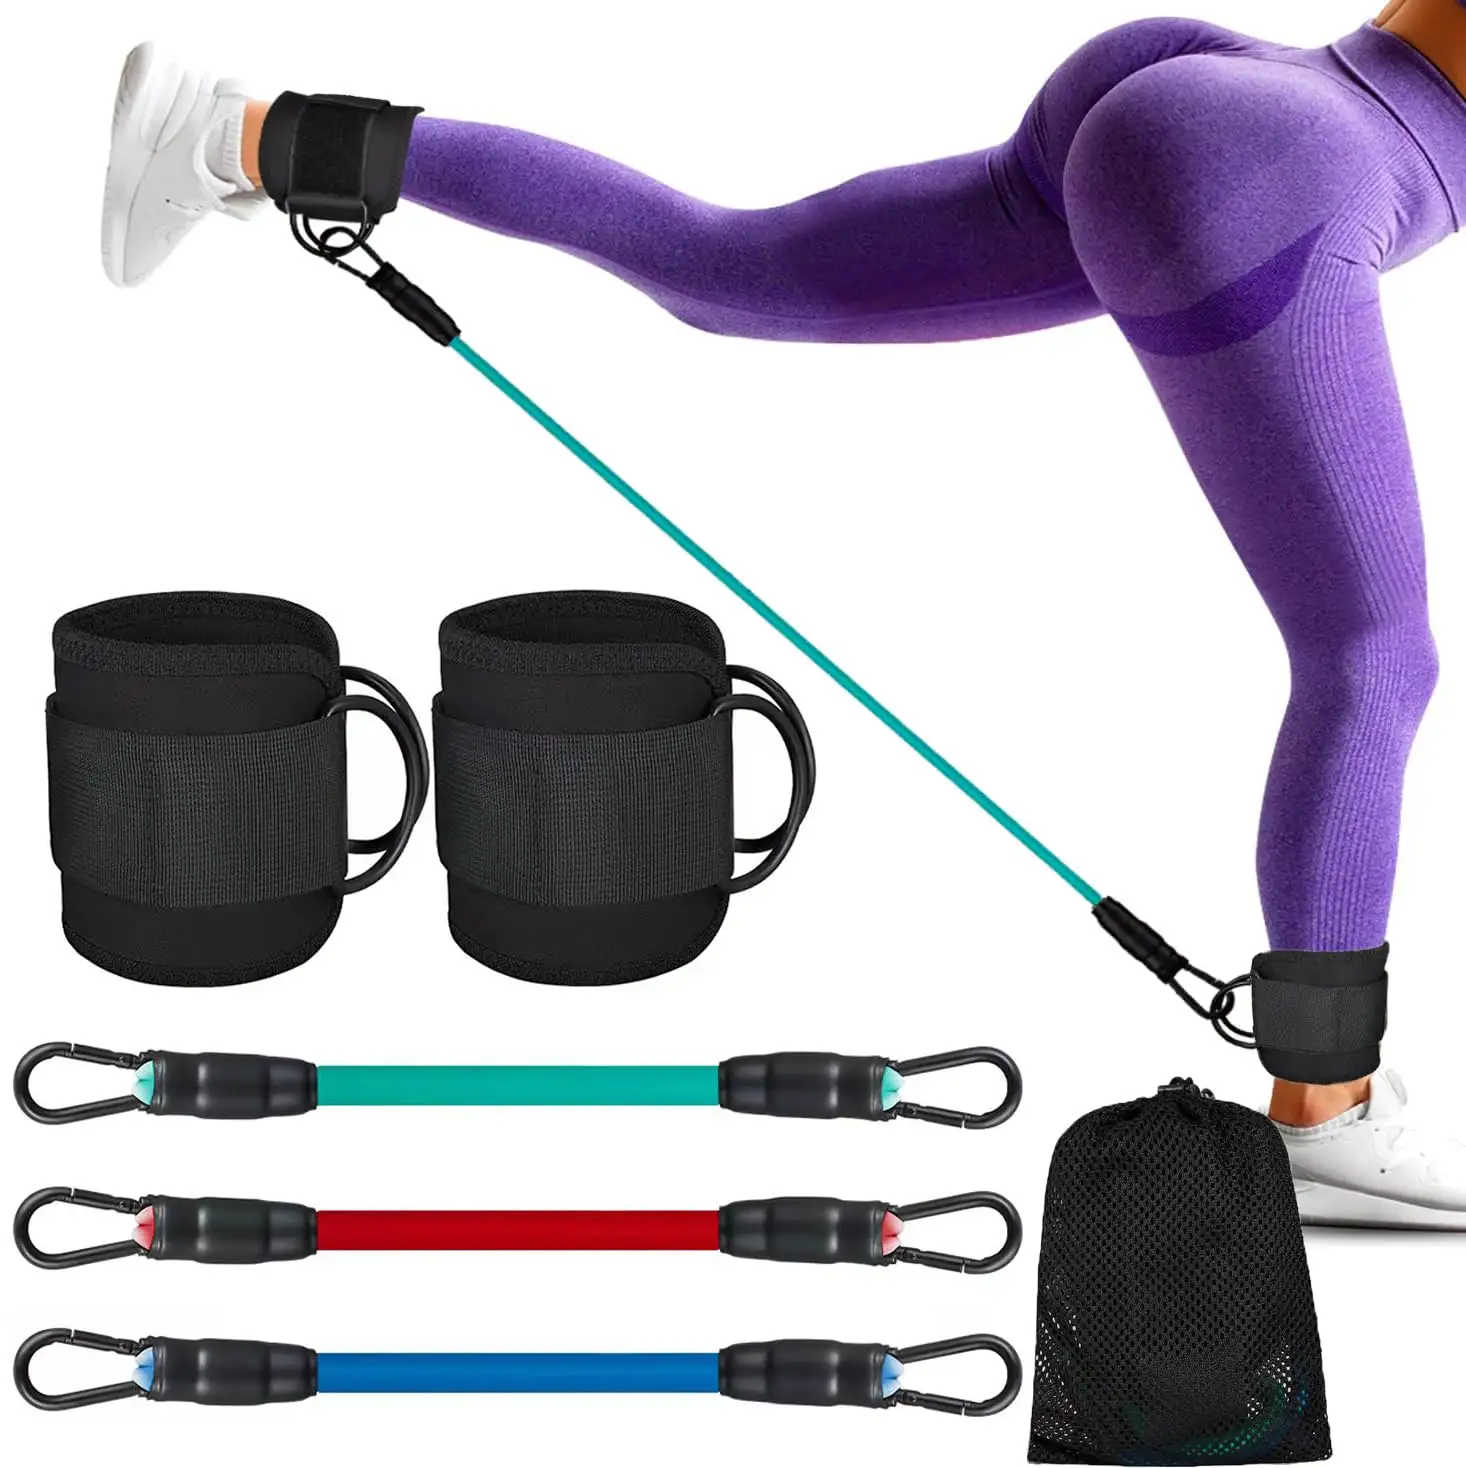 Set tali elastis lateks dan tali pergelangan kaki, perlengkapan latihan kecepatan dan kelincahan